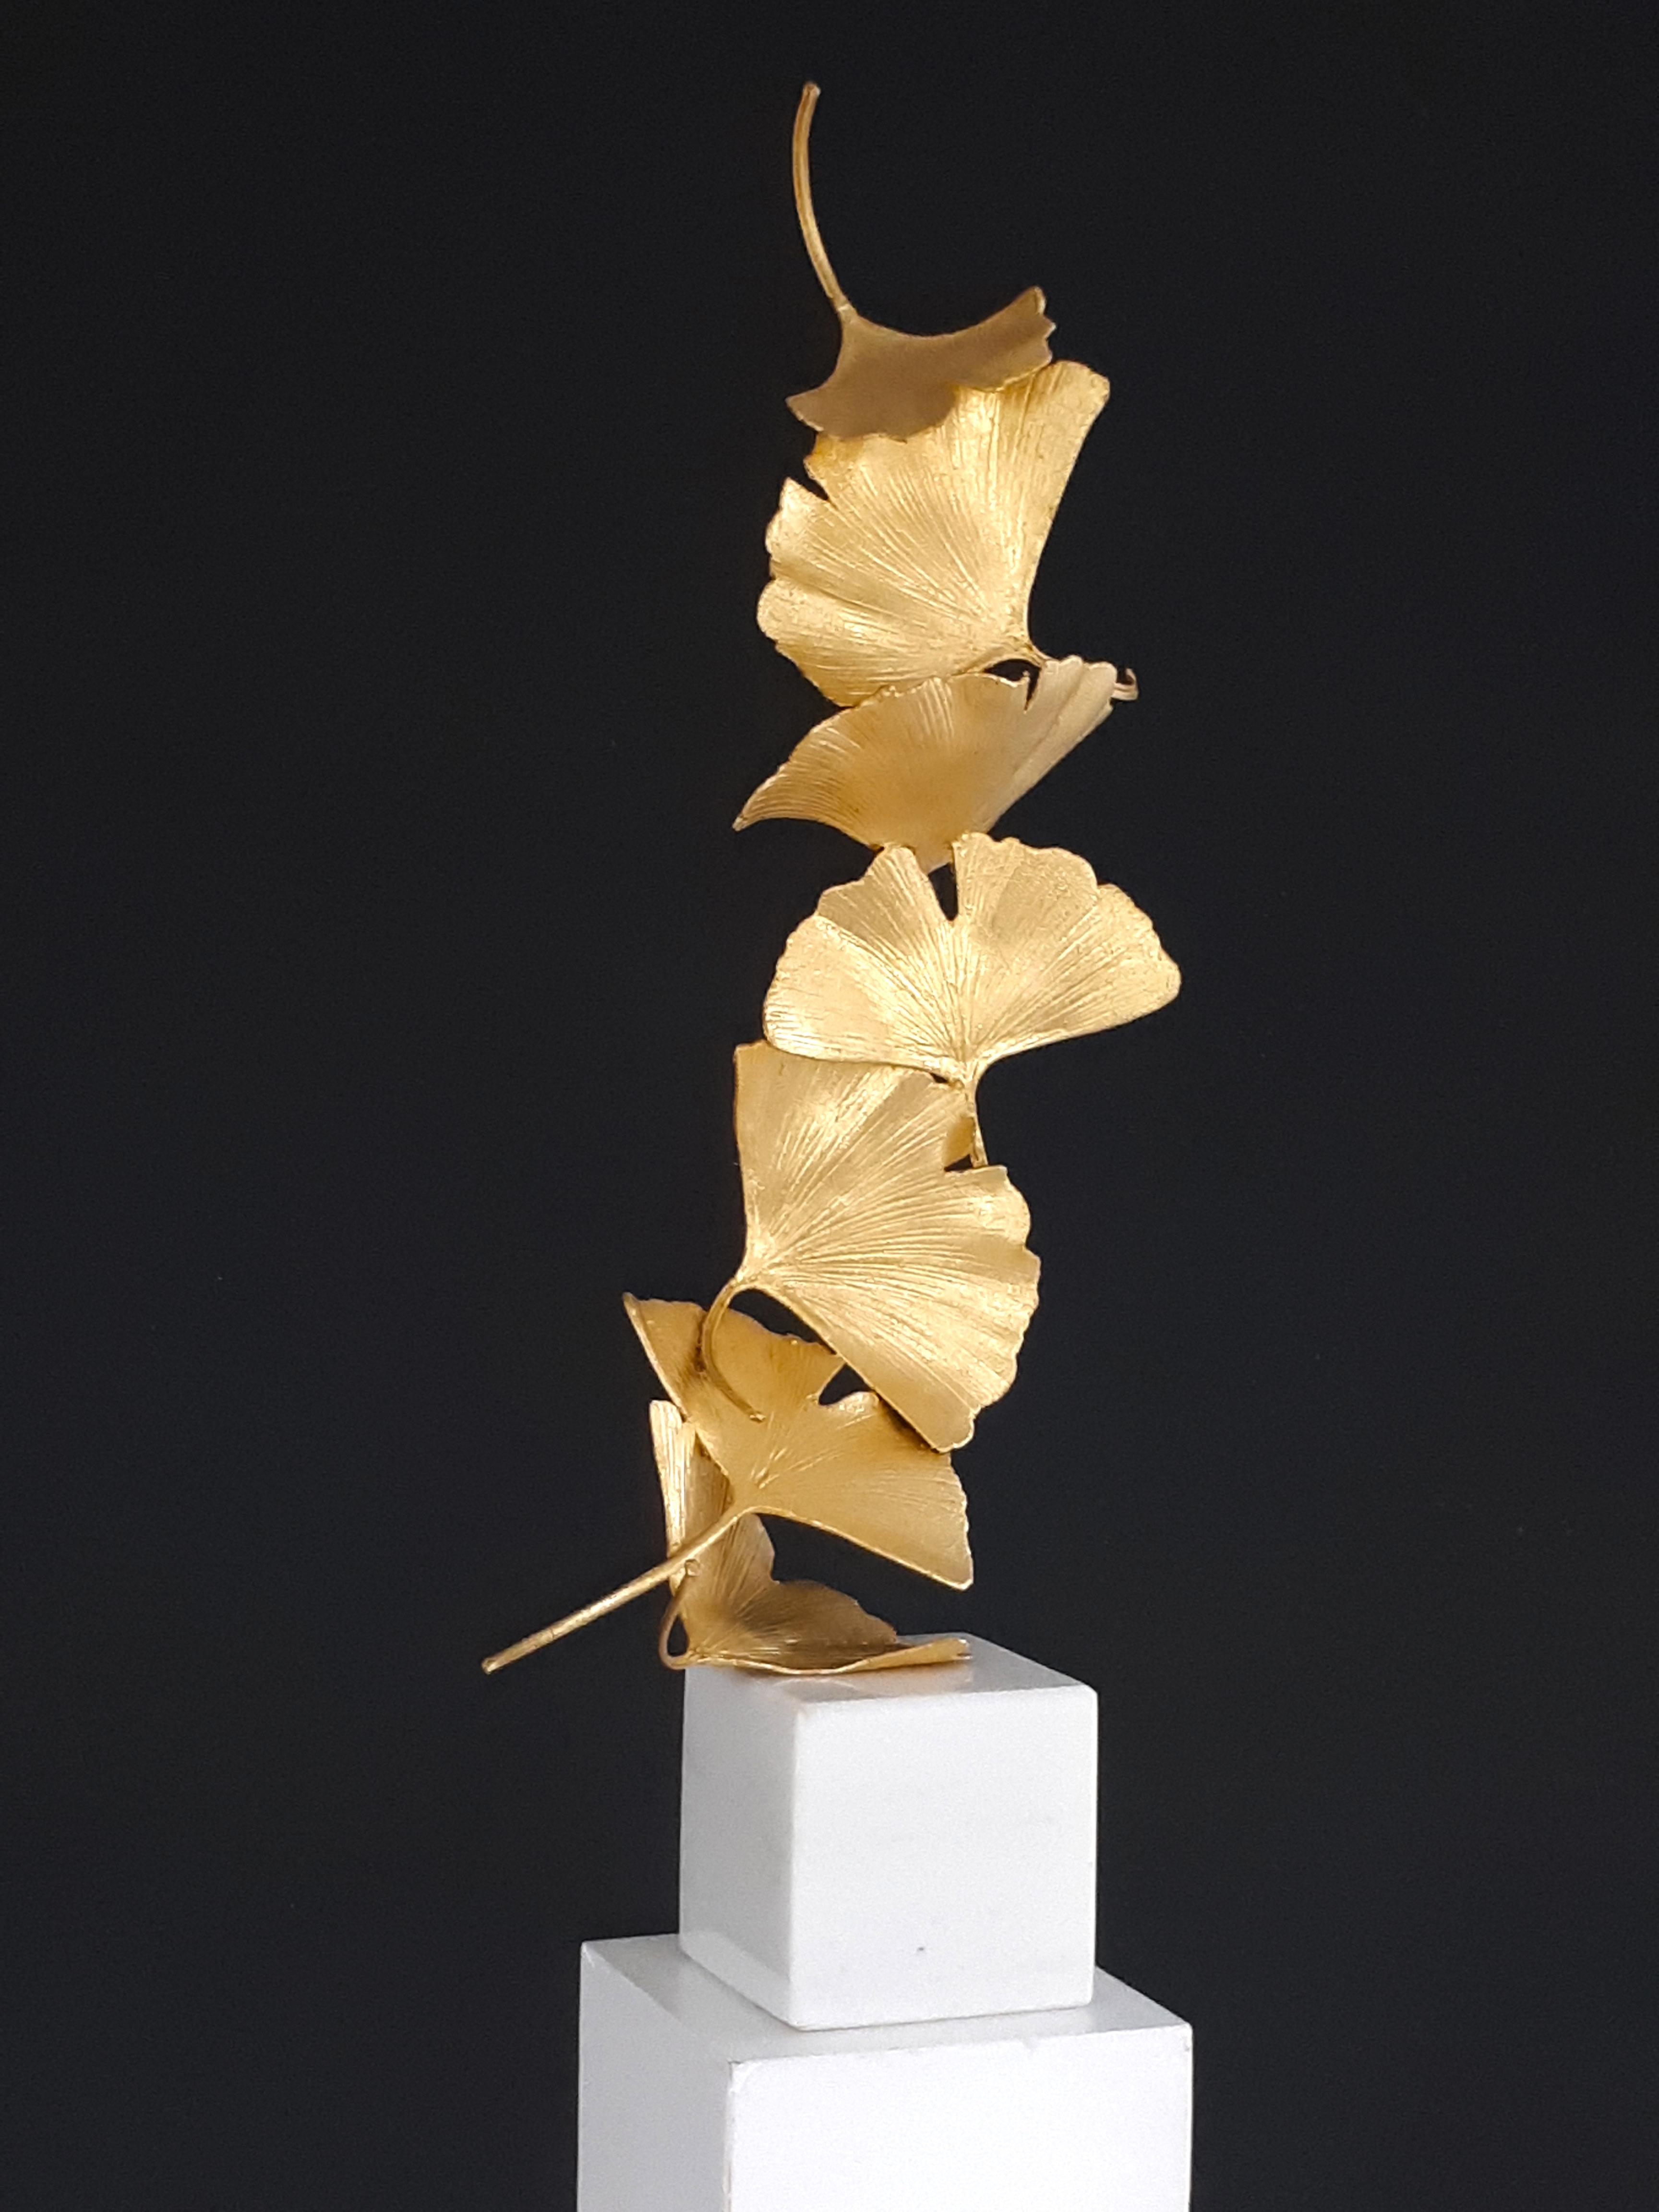 Kuno Vollet Abstract Sculpture – 7 goldene Gingko-Blätter – Goldskulptur aus gegossenem Messing auf weißem Marmorsockel